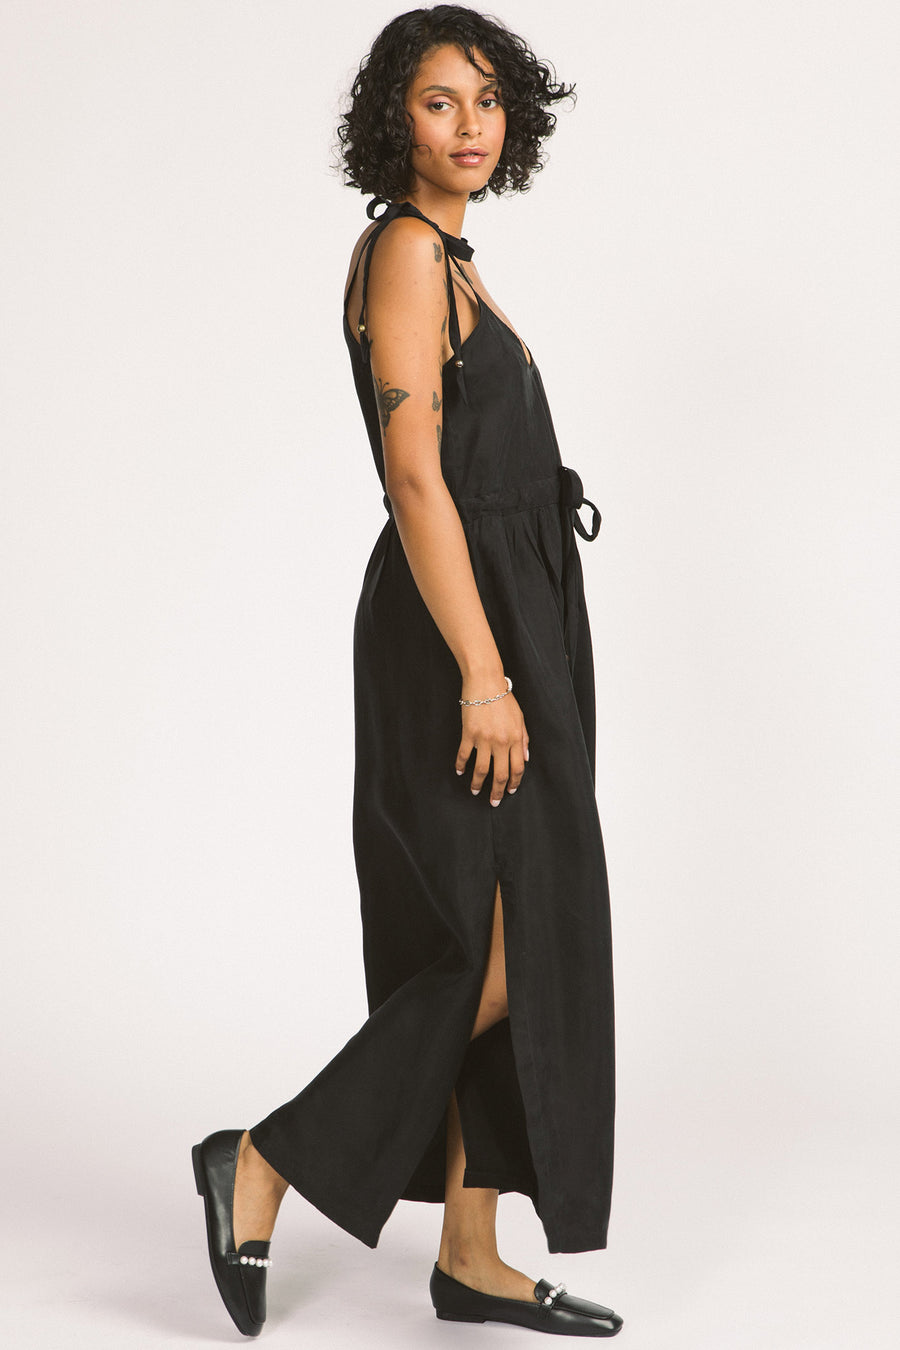 Side view of woman wearing black Novalie dress by Allison Wonderland with adjustable shoulder straps and waist. 